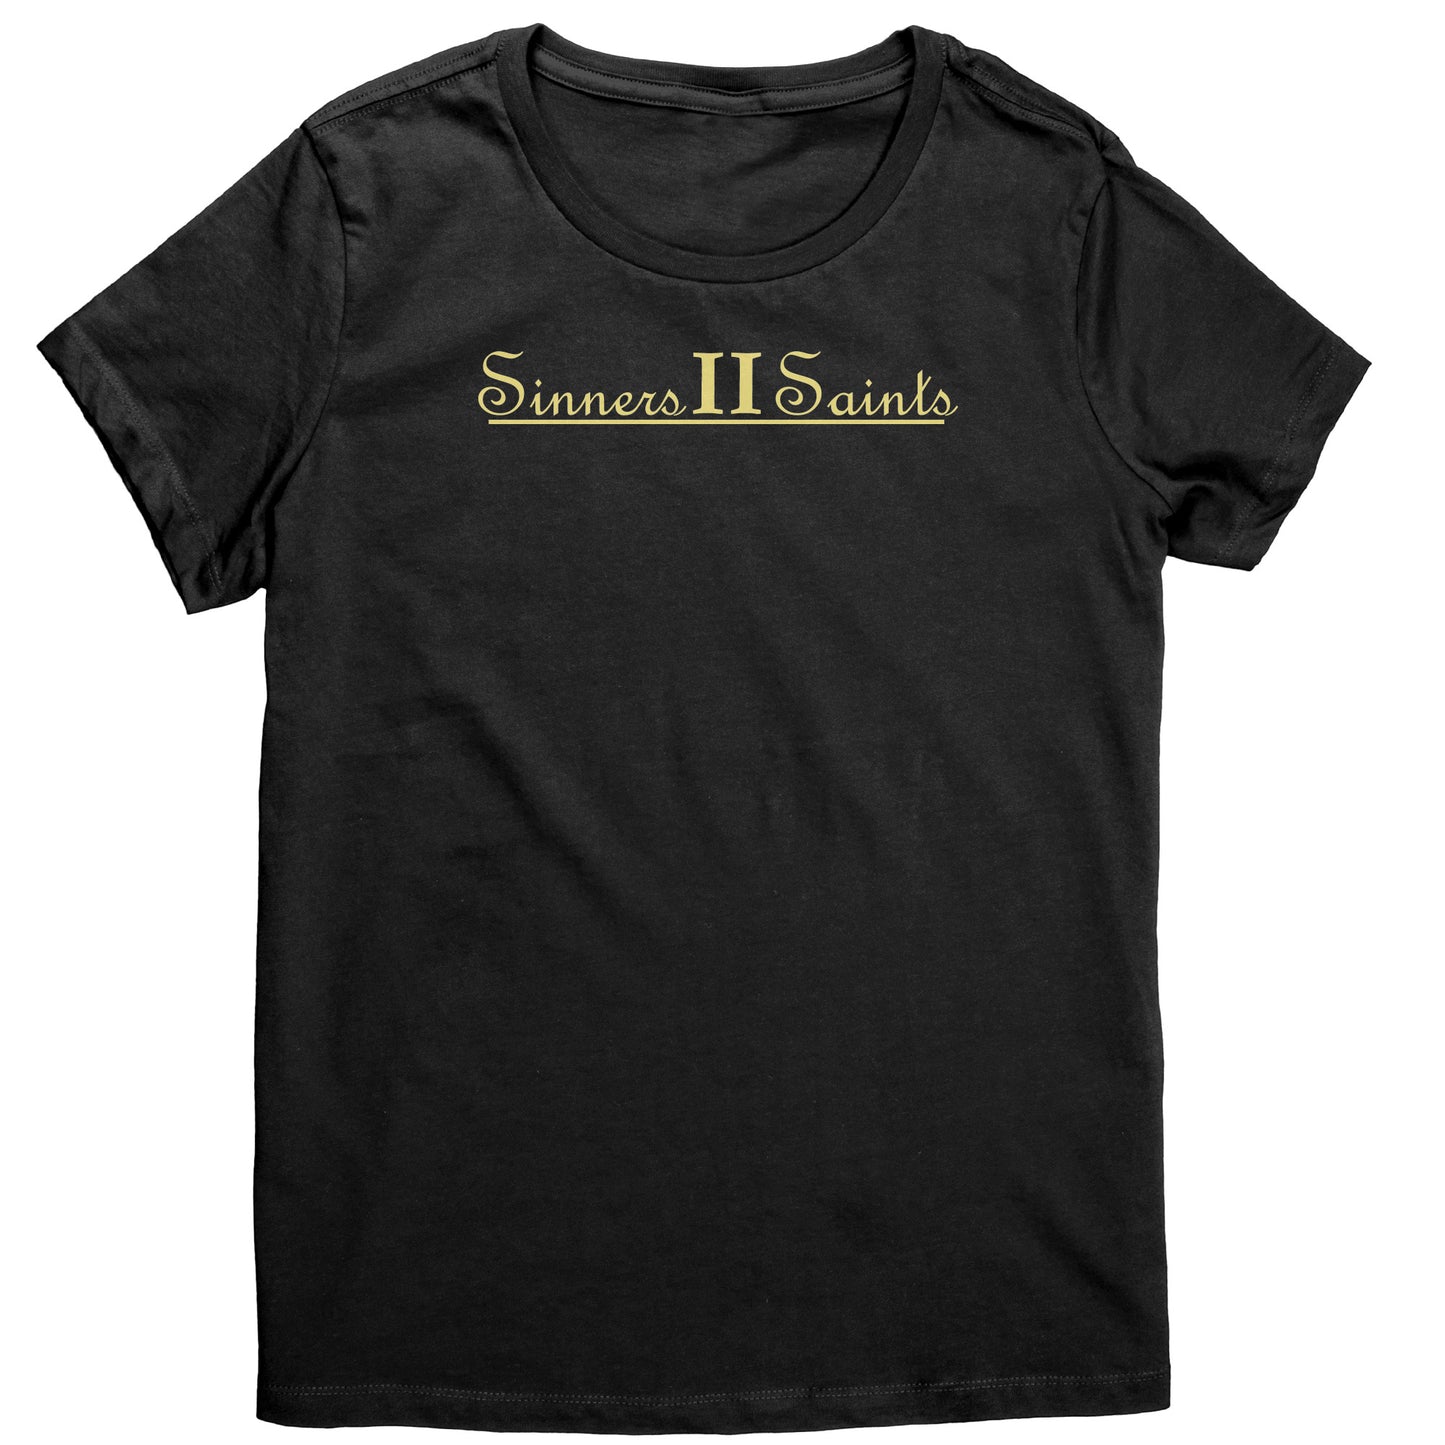 Sinners II Saints Women's T-Shirt